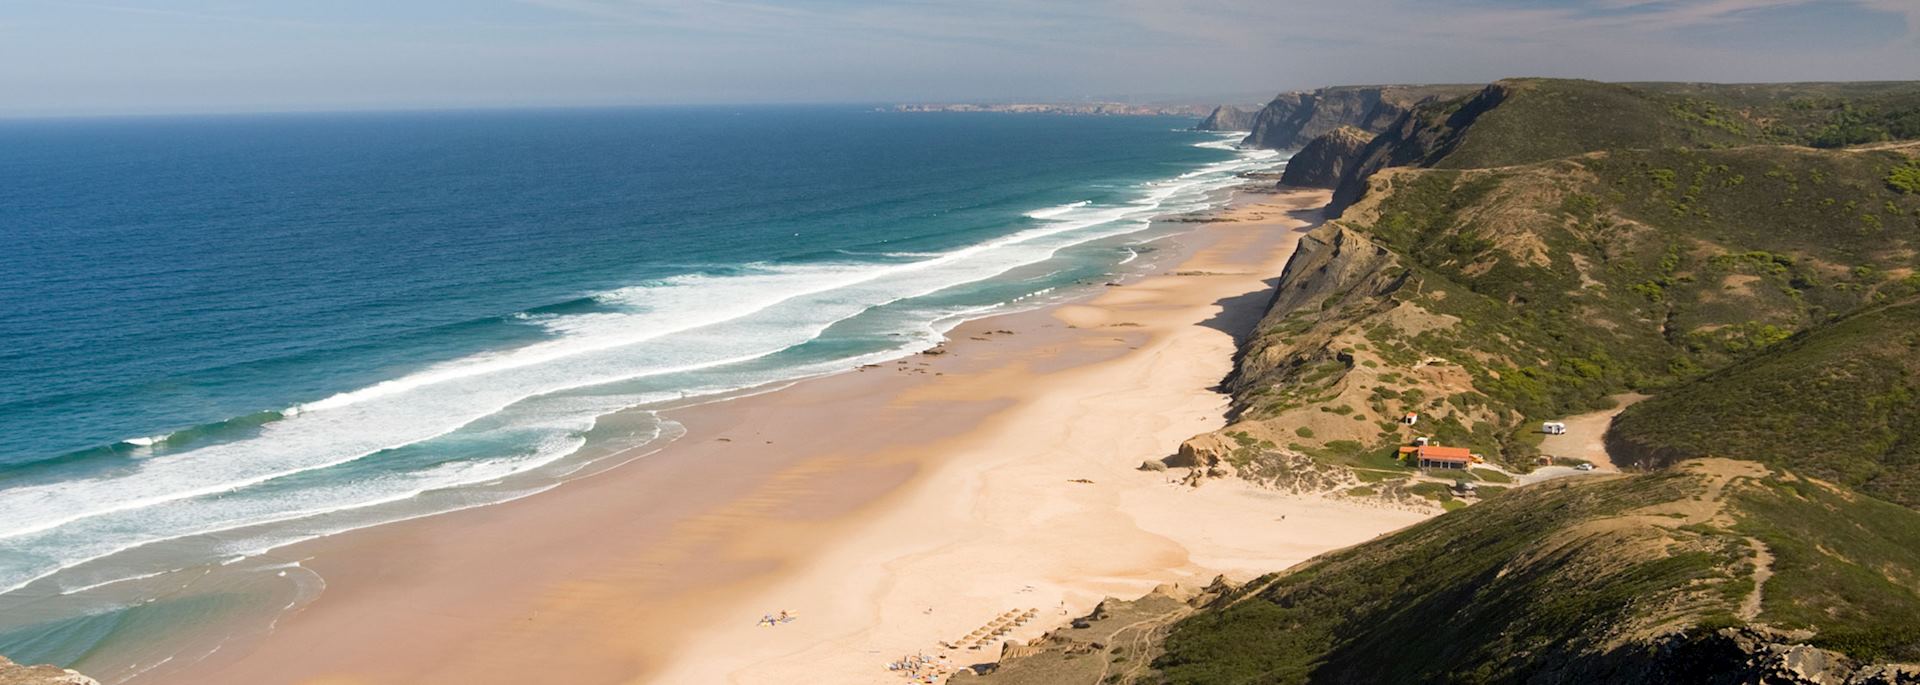 Praia do cordama on Portugal's Algarve coast